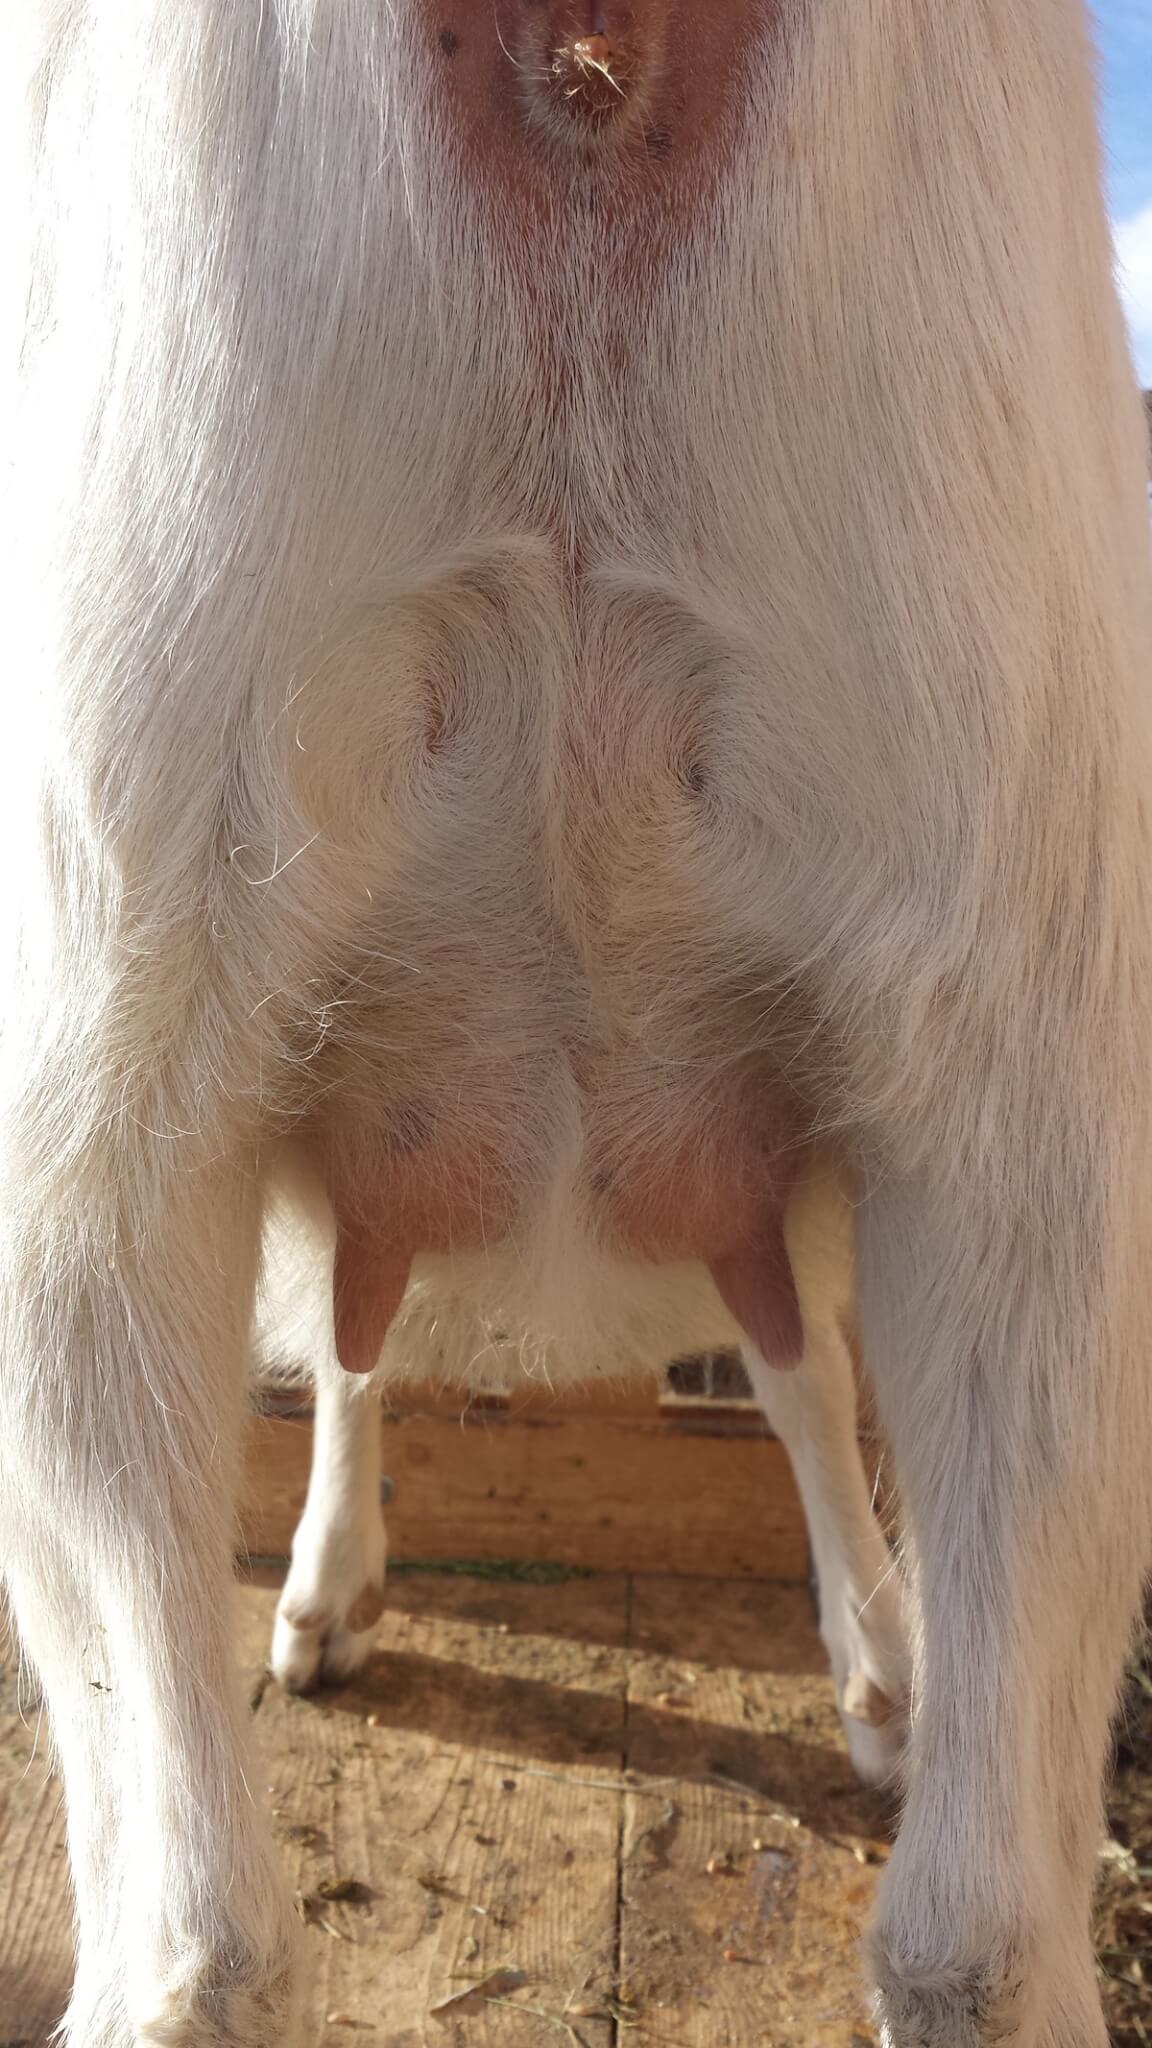 the enlarged udder of a pregnant goat